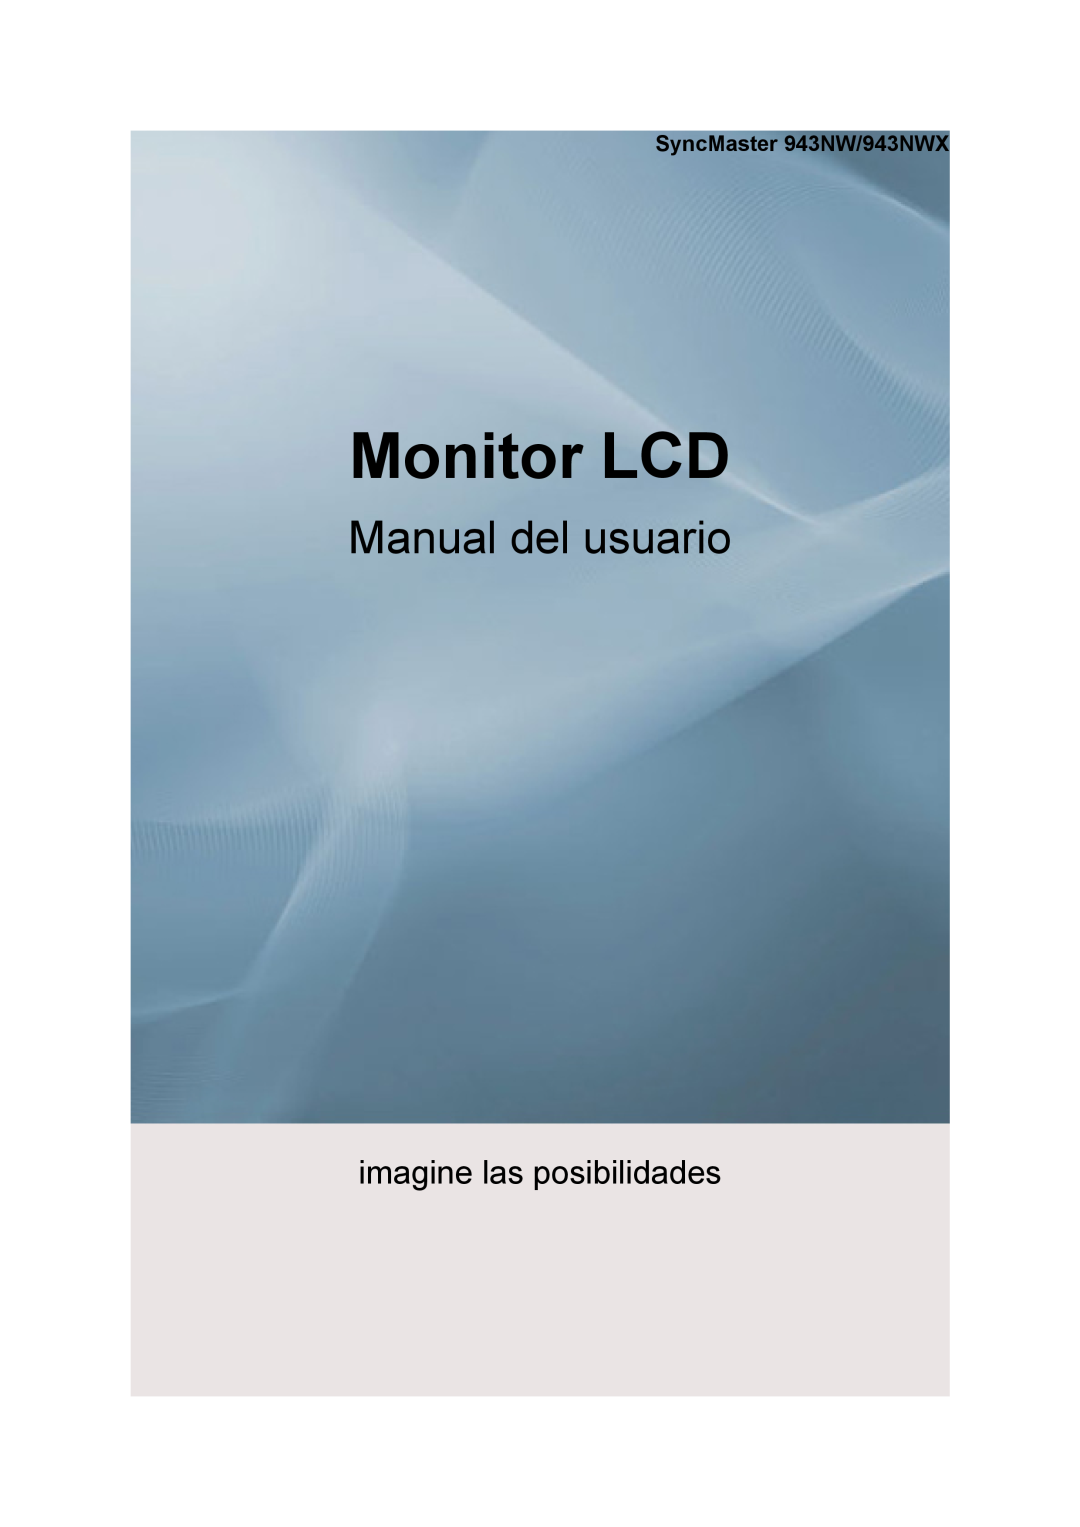 Samsung LS19MYNKBBUEDC manual SyncMaster 943NW/943NWX, Monitor LCD, Manual del usuario, imagine las posibilidades 